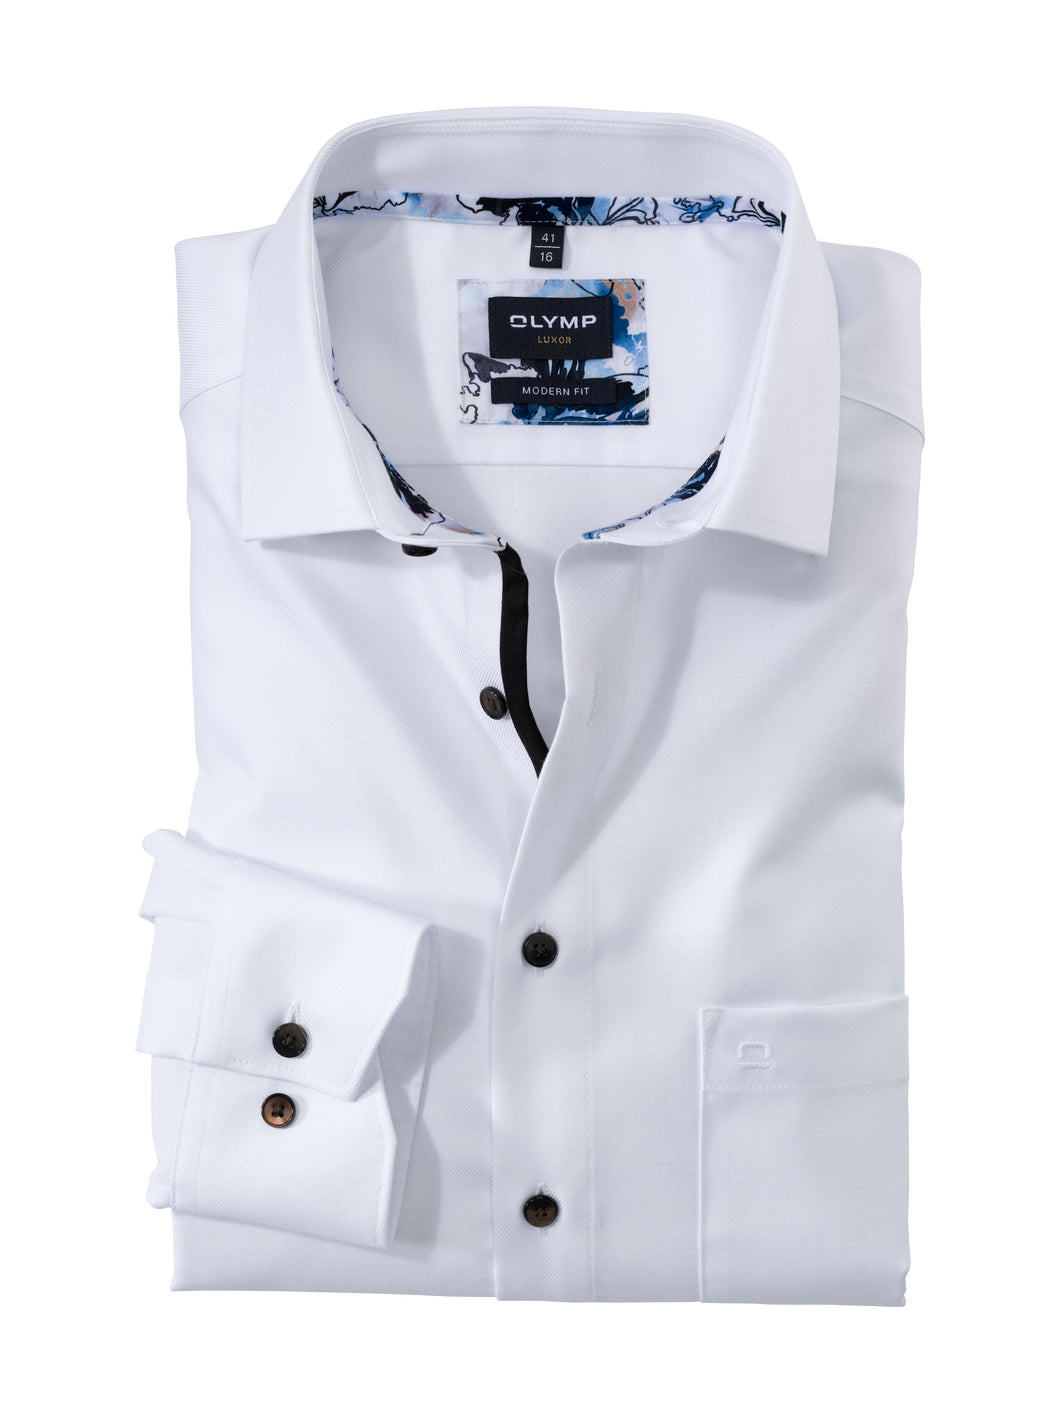 OLYMP Luxor Modern Fit Shirt White